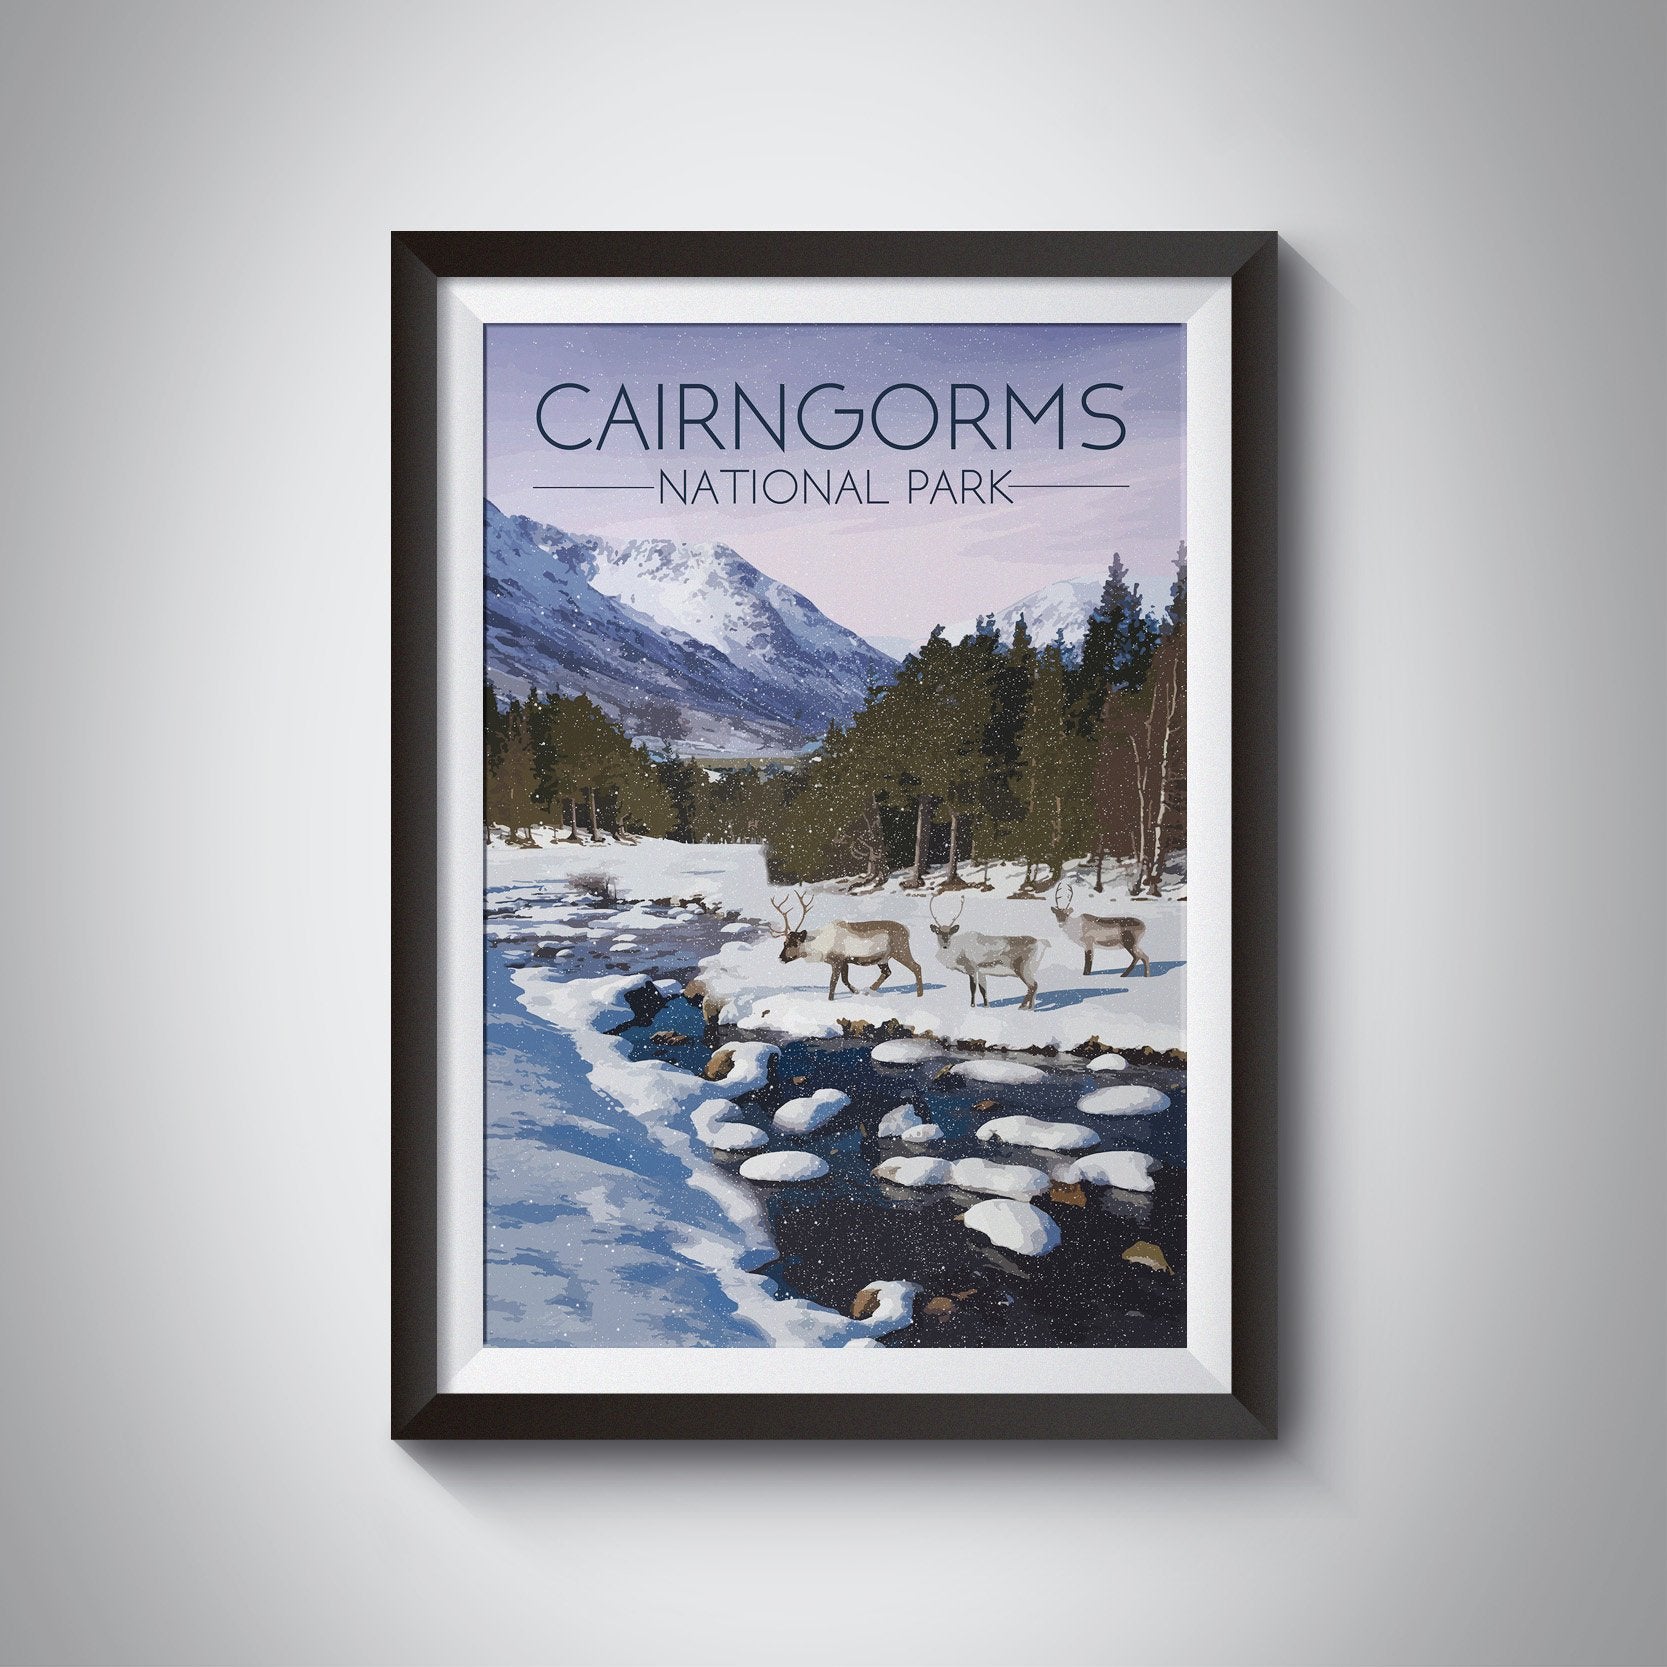 Cairngorms National Park Scotland Travel Poster